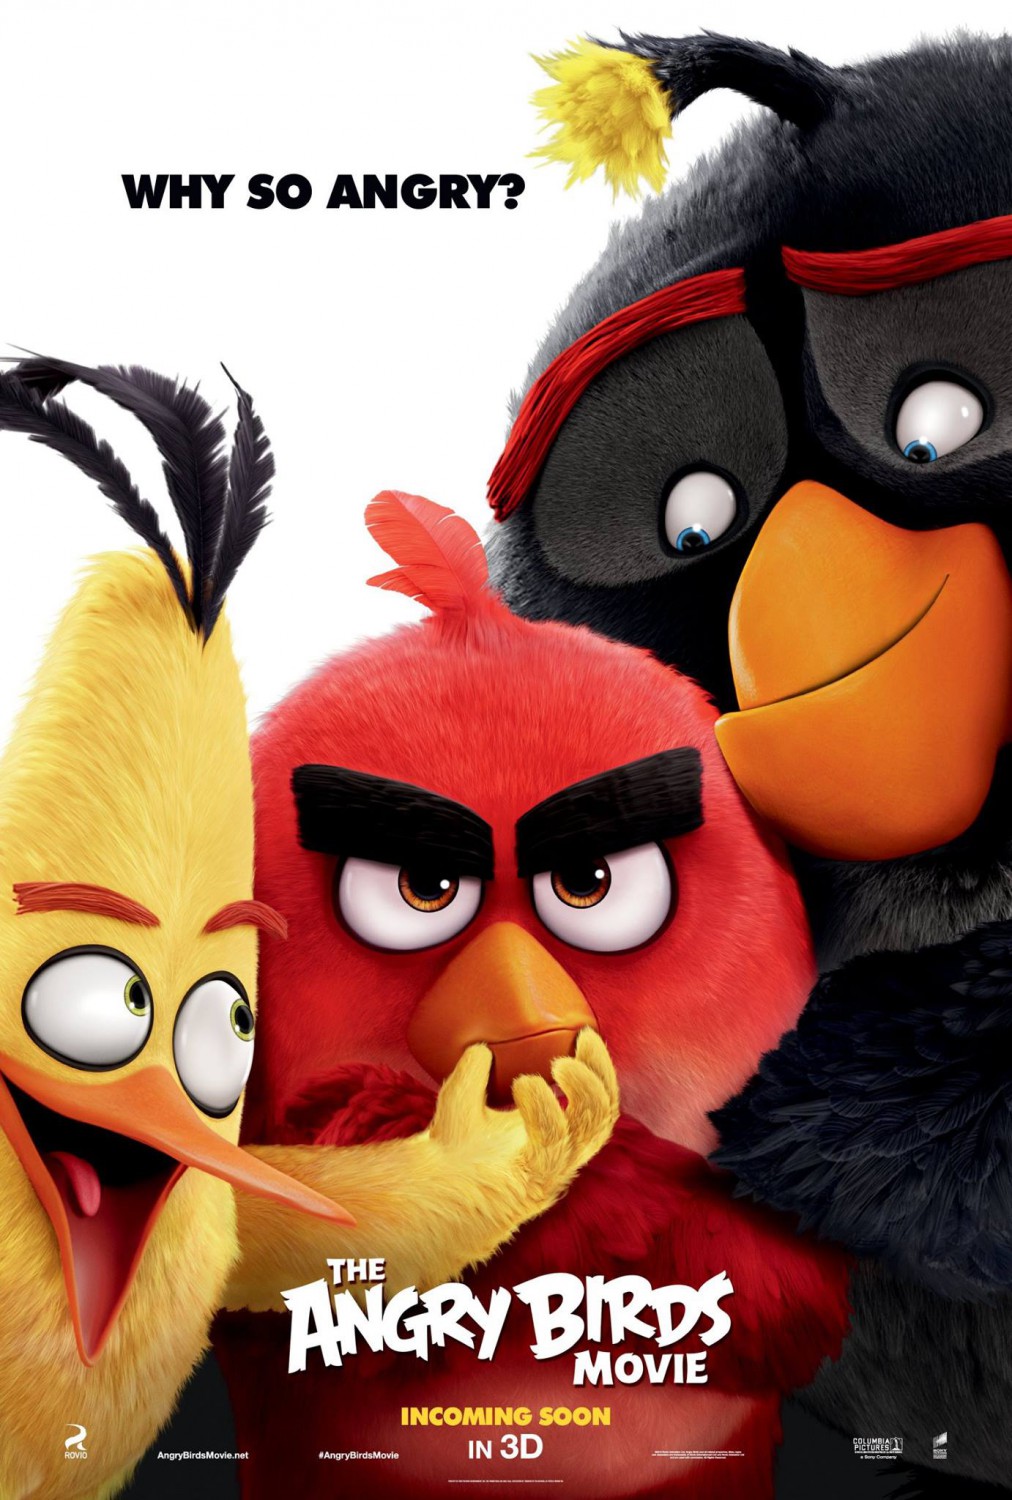 Resultado de imagen para angry birds movie poster 2016